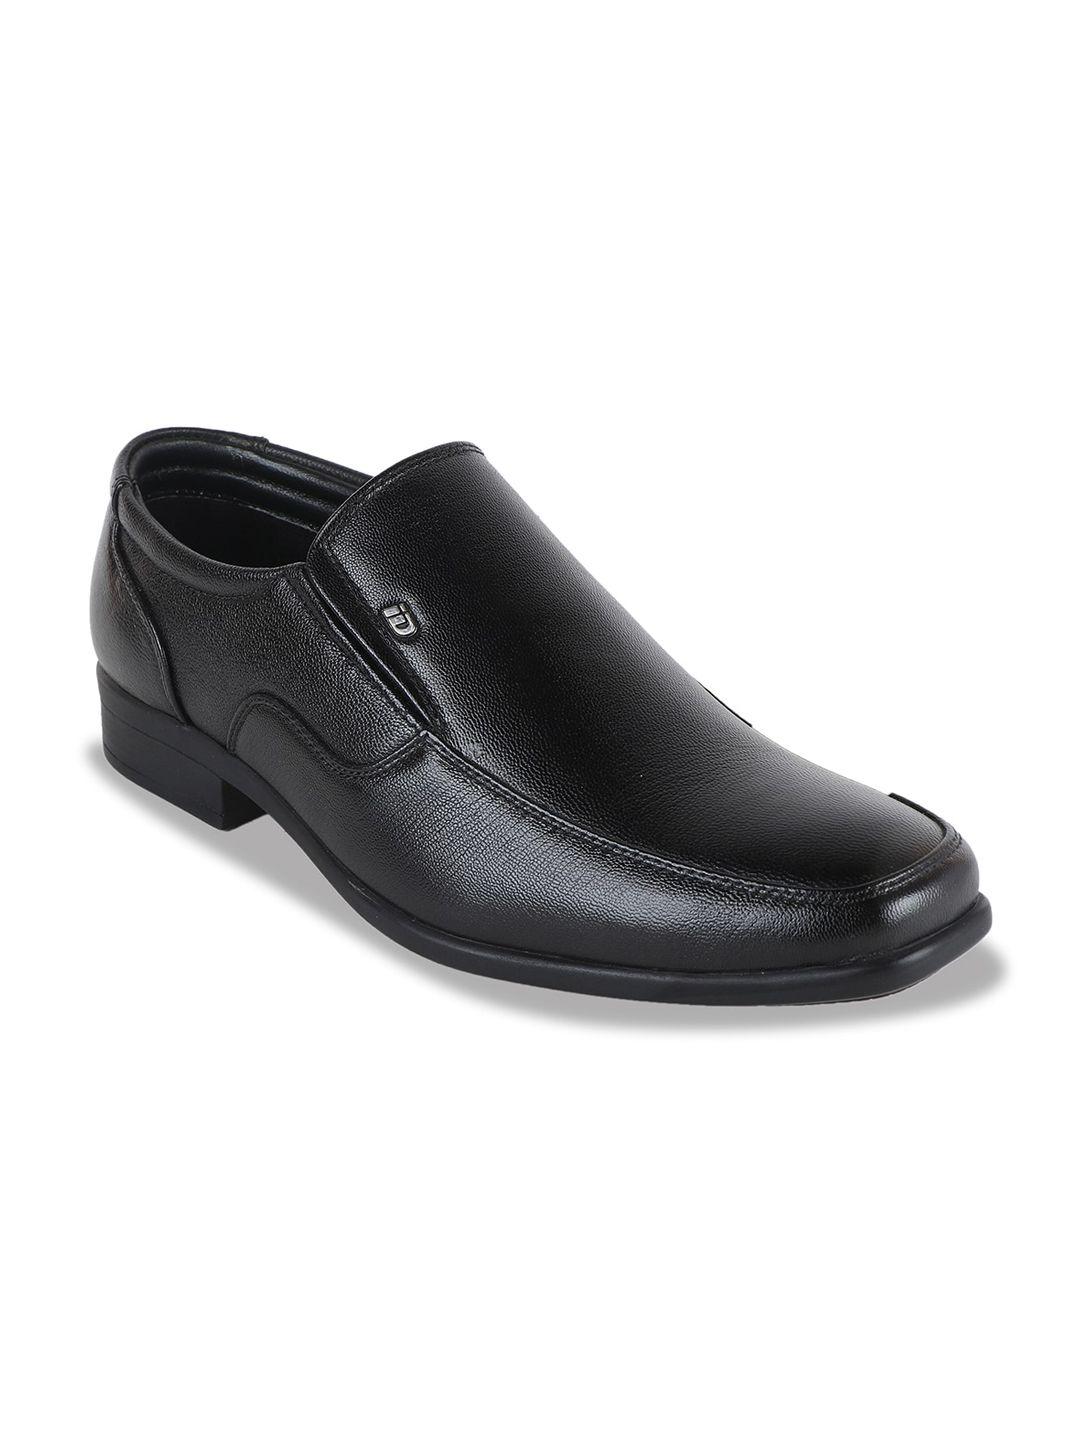 id-men-lightweight-leather-formal-slip-on-shoes